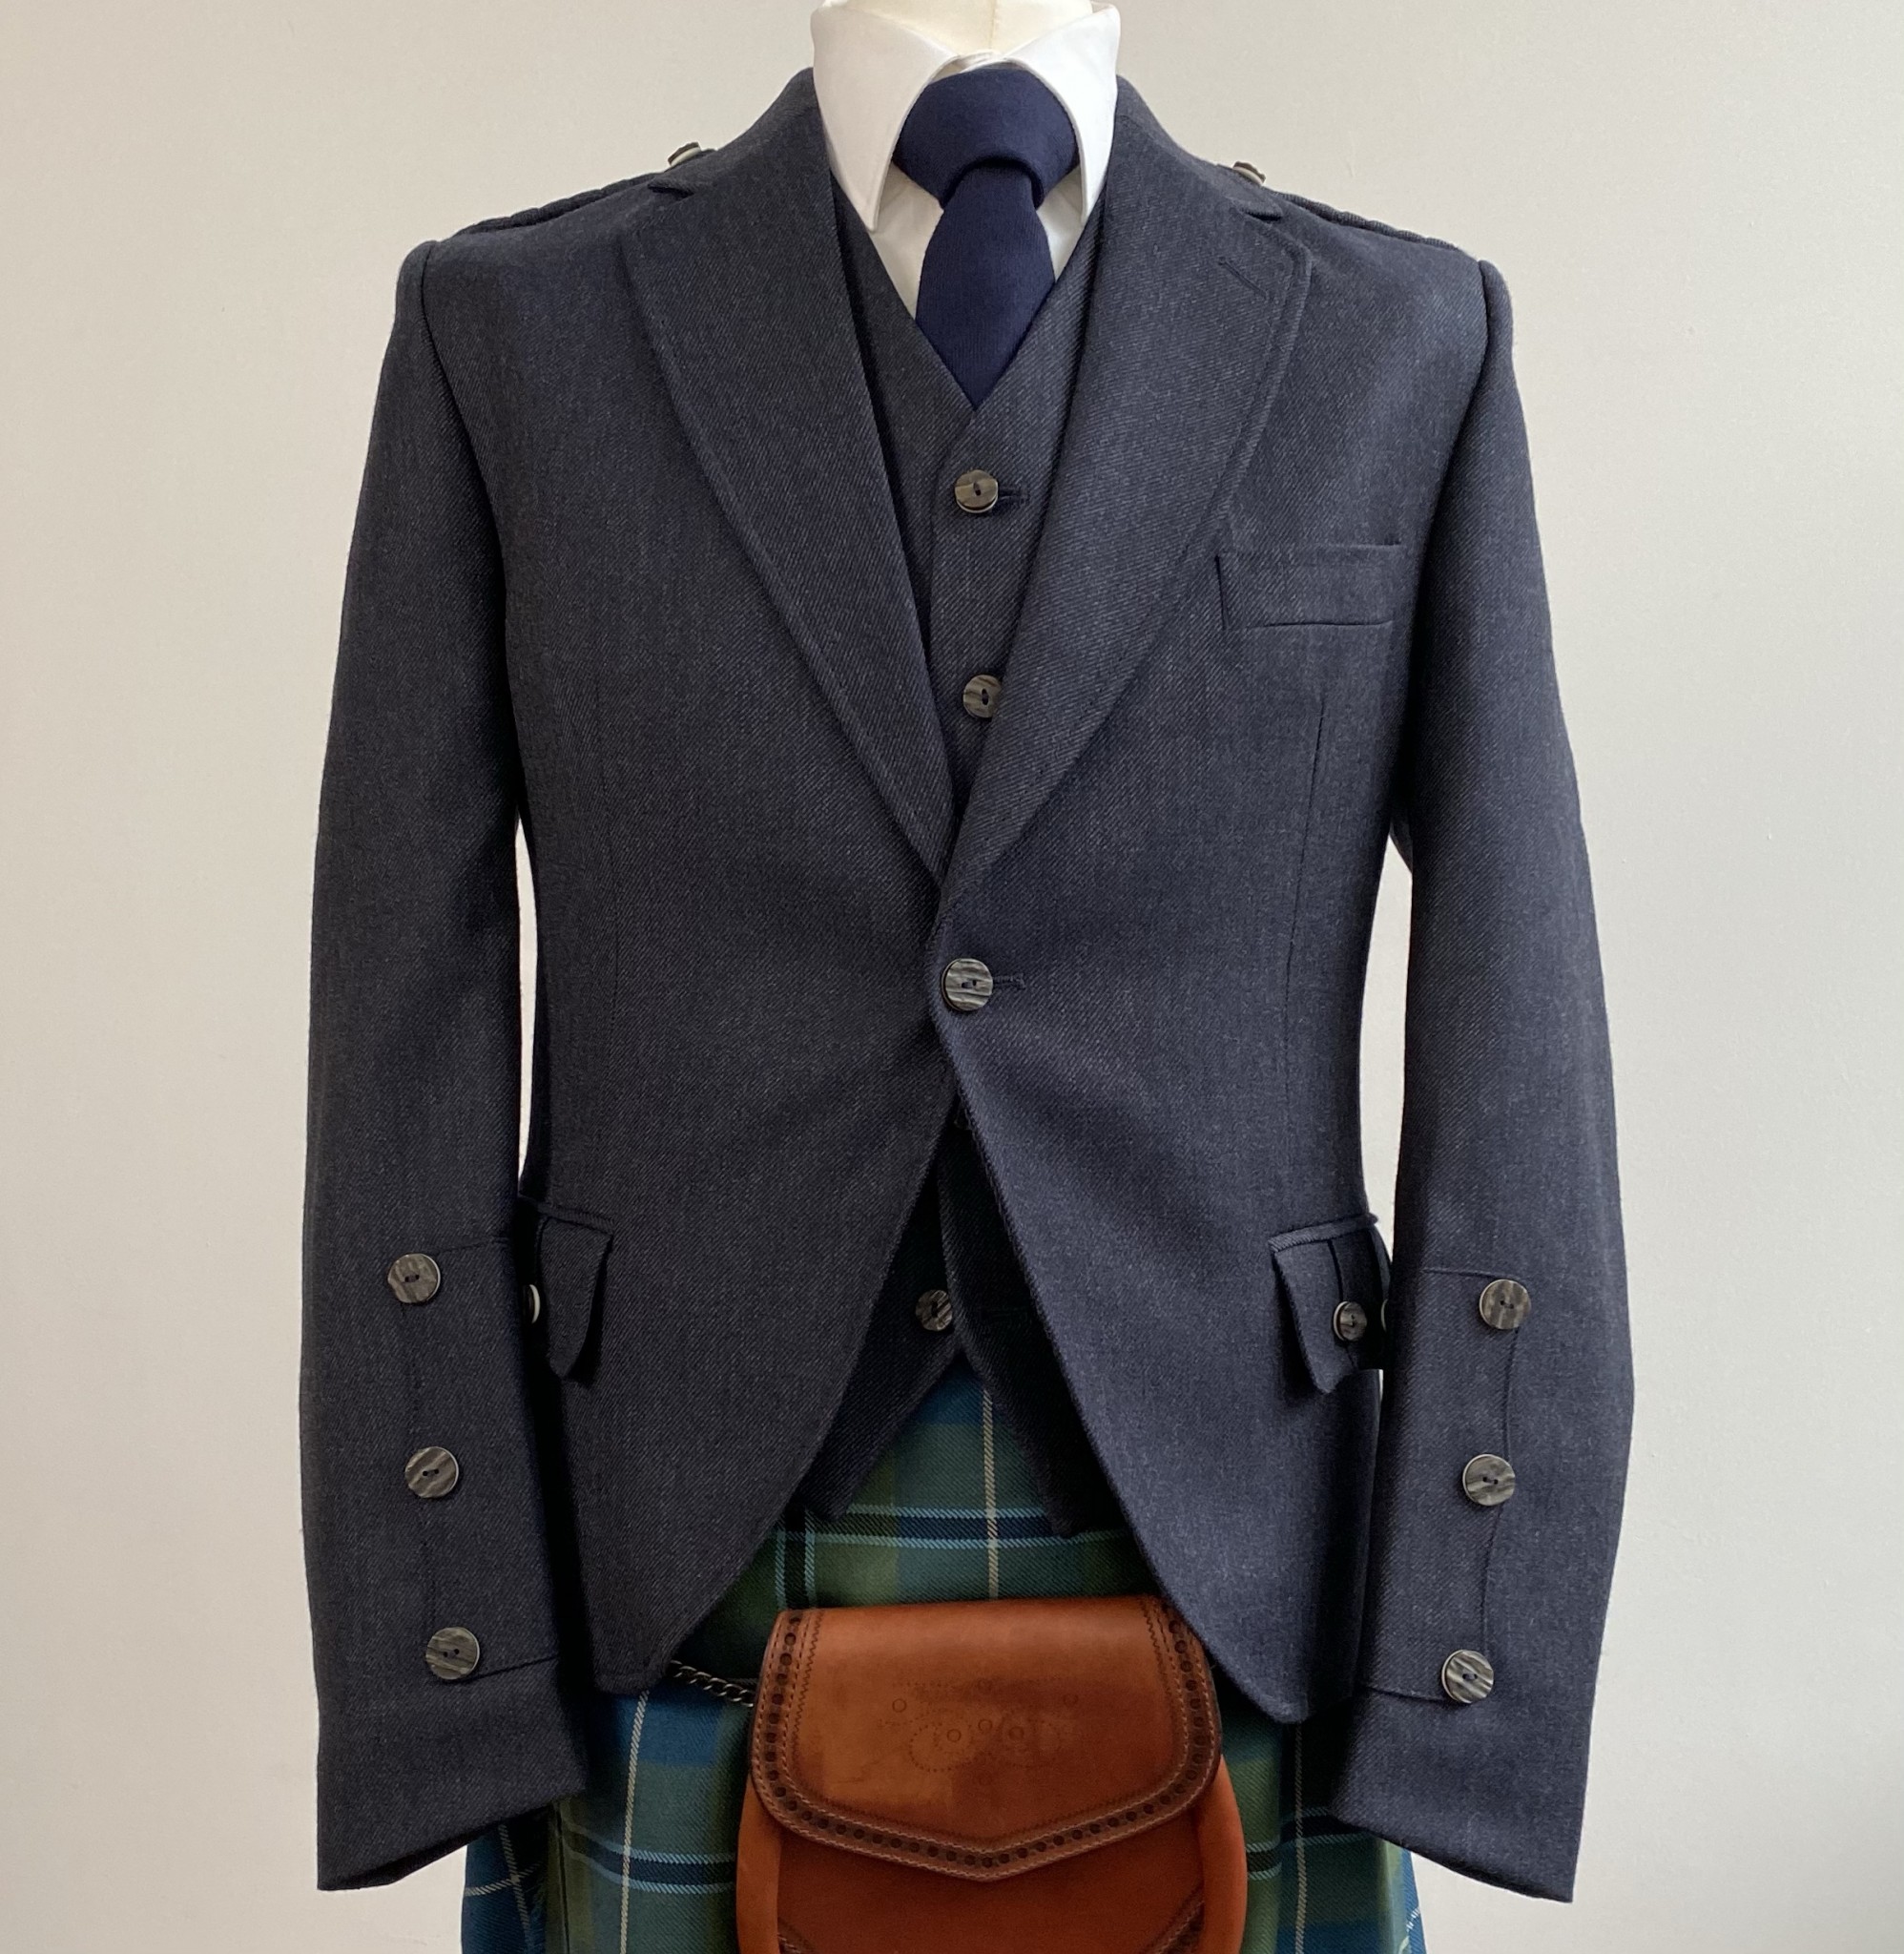 Tweed Kilt Jacket + Waistcoat (Crail) - Midnight - Artisans of Scotland